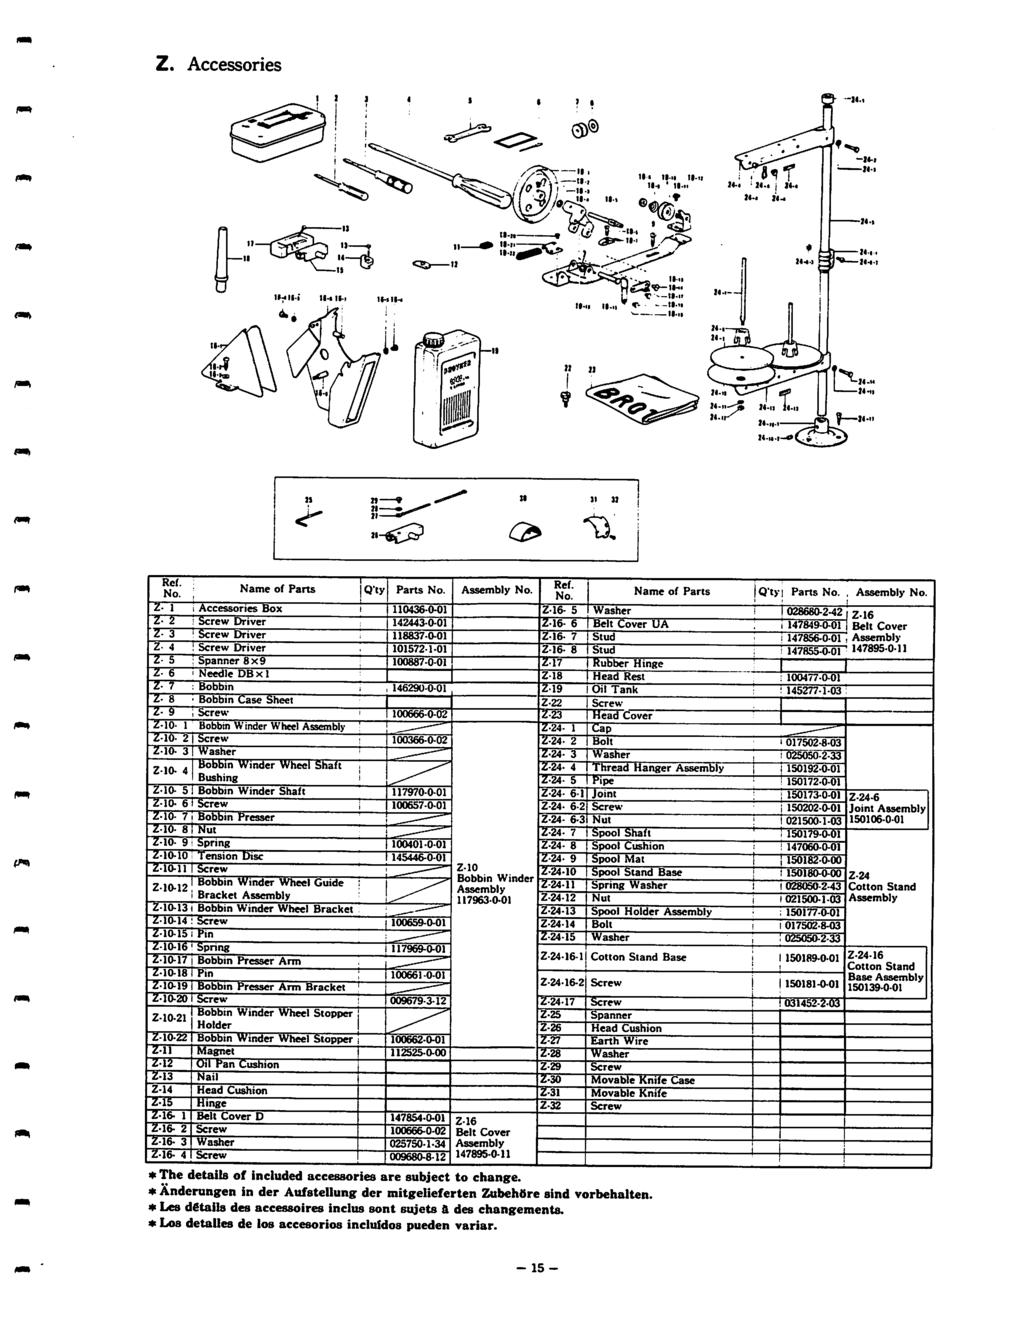 5080-0-00 Z. Accessories / II» III - ll-u ' I-II IMKi li-< ll-i Il-li ll-ll * --tl-'i t). Ref. Name of Parts Qty Parts Ref. Name of Parts loty Parts.